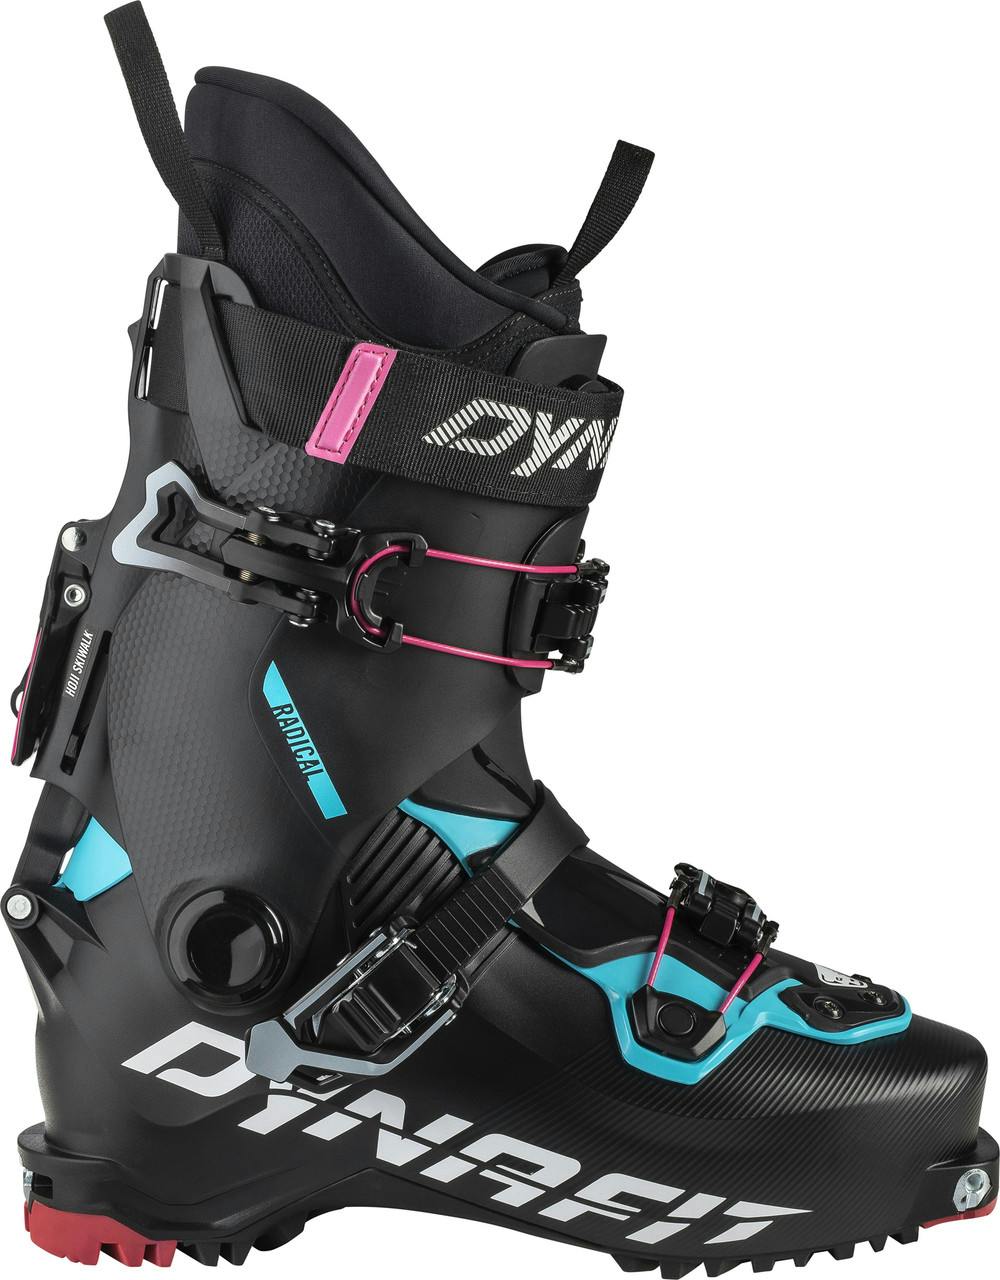 Radical Ski Boots Black/Flamingo